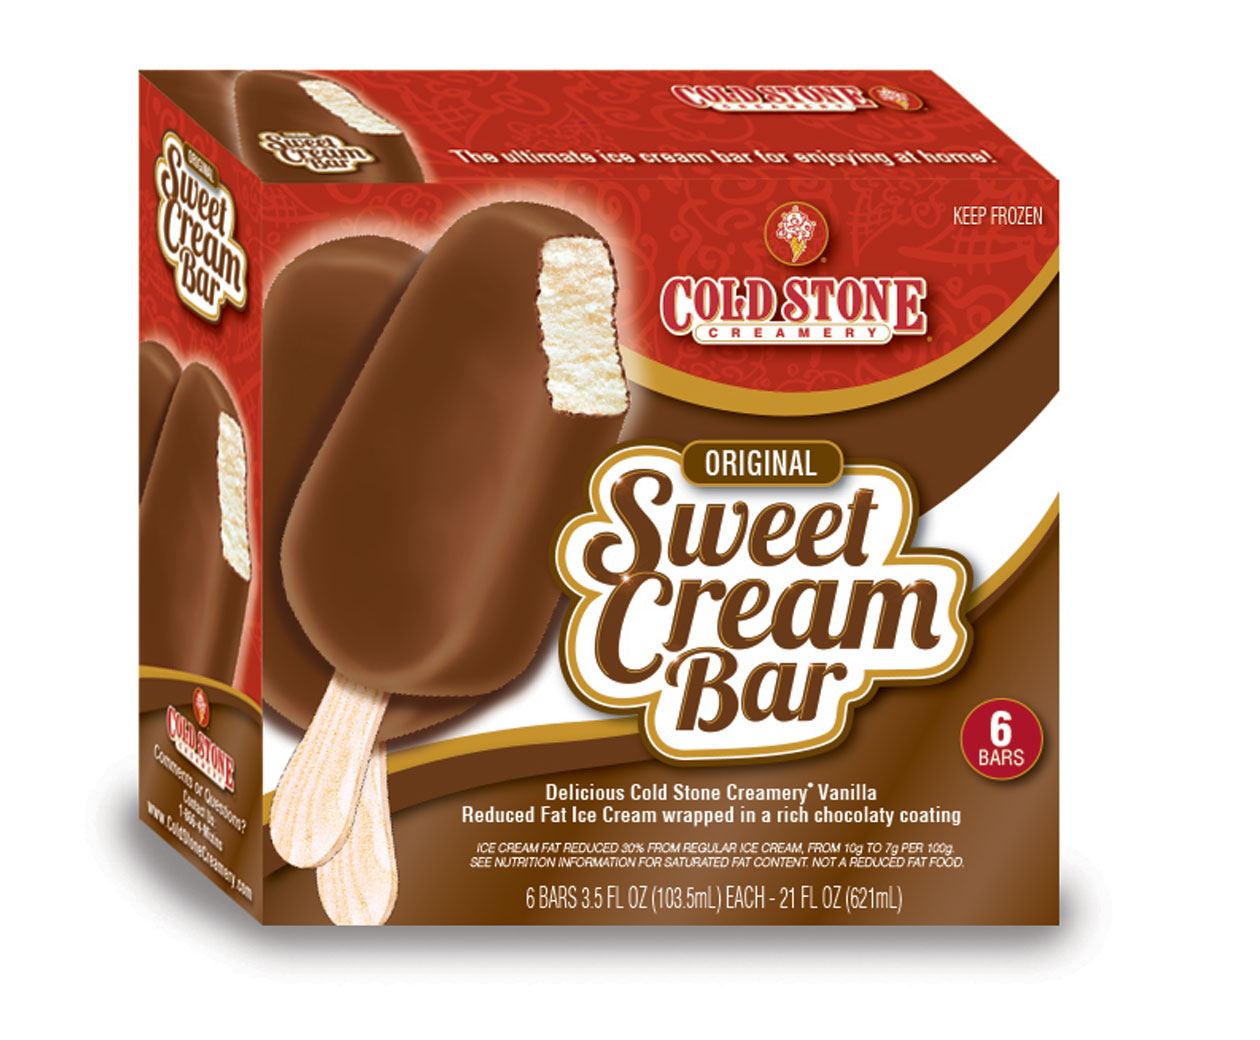 original sweet cream bar delicious cold stone creamery vanilla reduced fat ice cream wrapped in a rich chocolaty coating. 6 bars